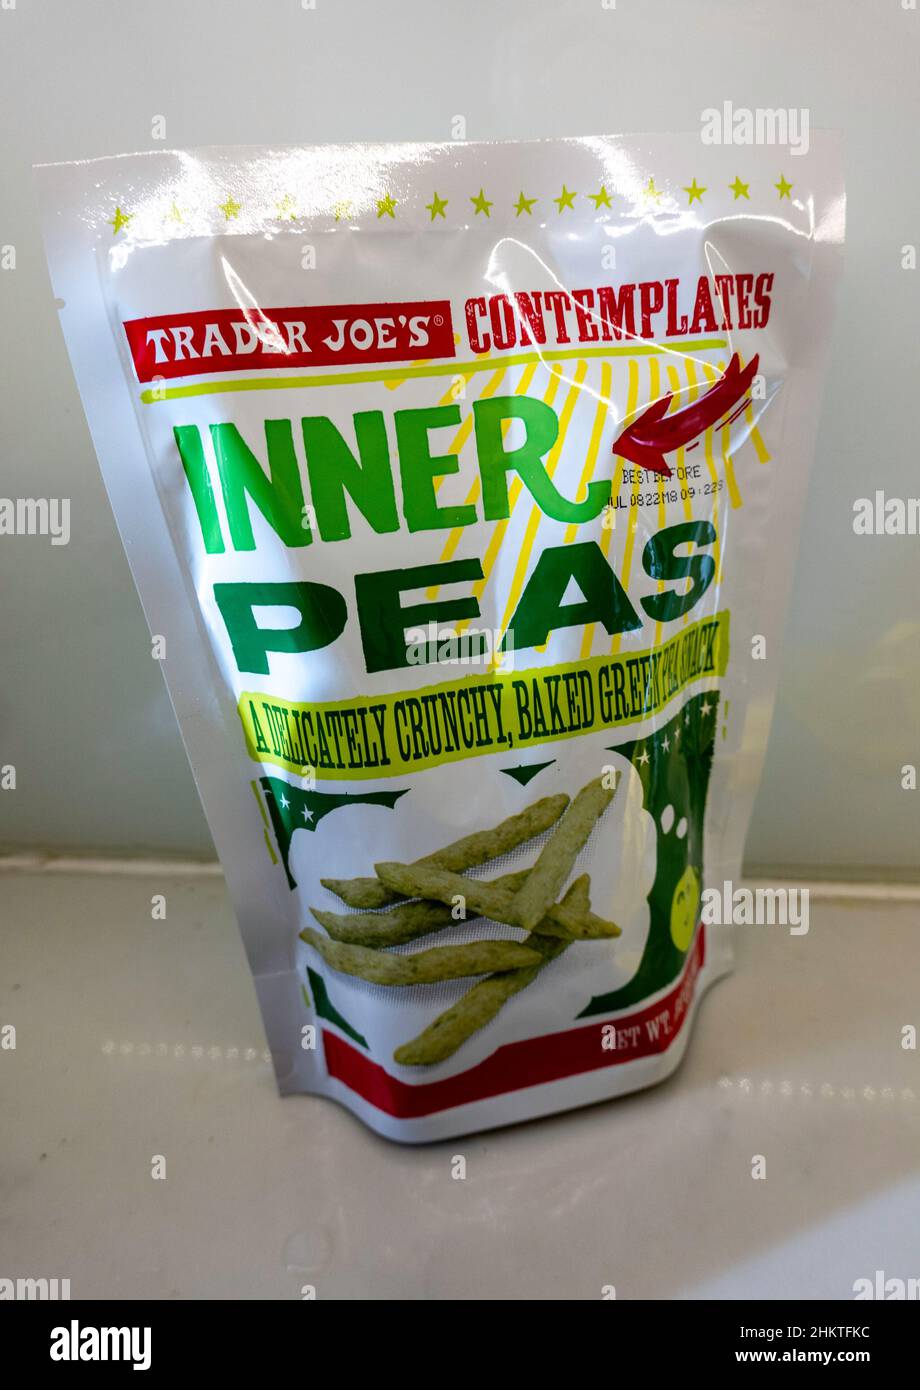 Snackbeutel mit Trader Joe's Inner Peas, USA Stockfoto